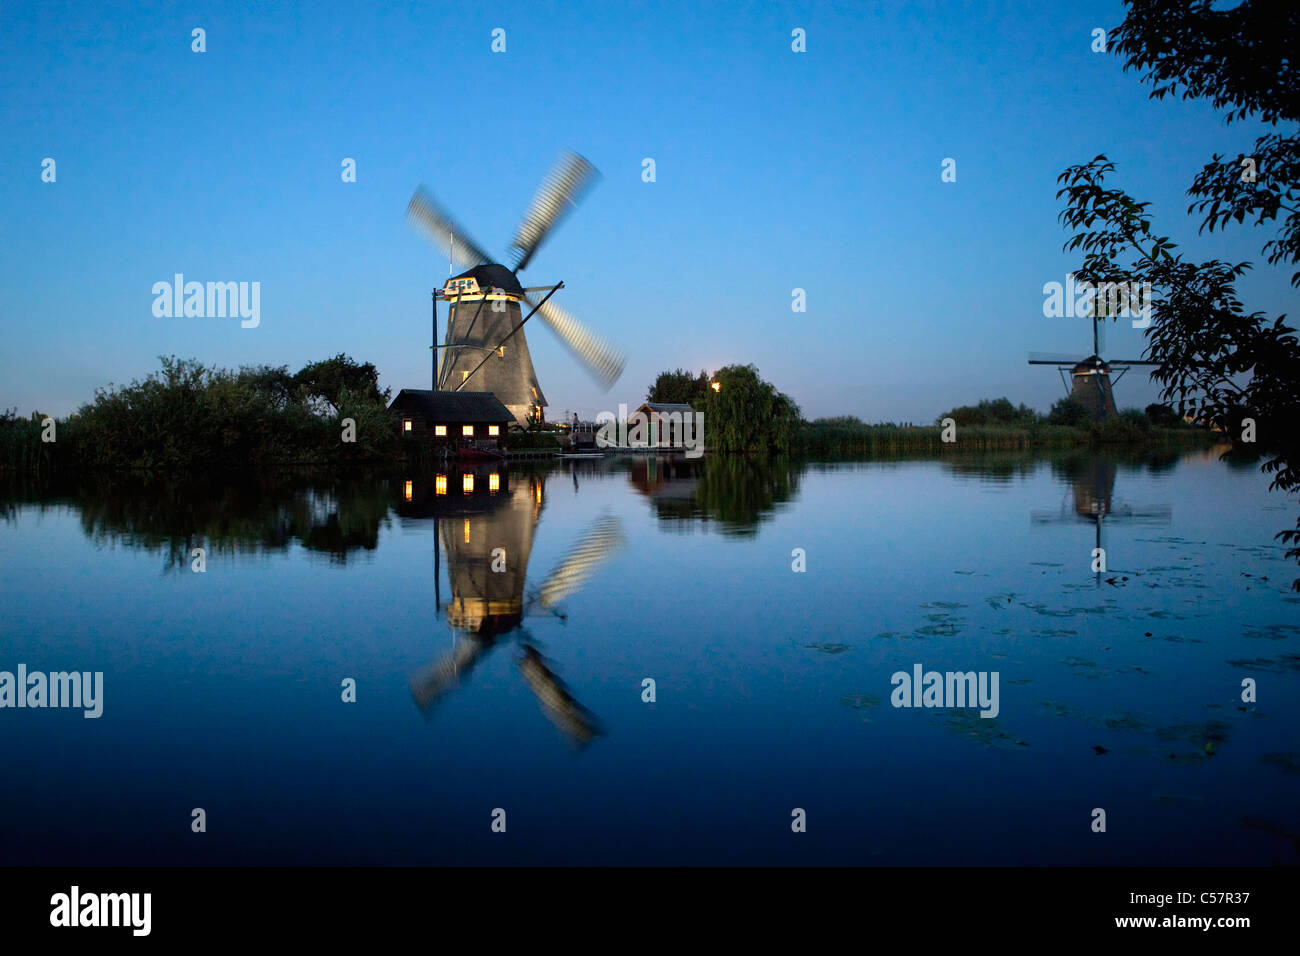 The Netherlands, Kinderdijk, Illuminated windmill, Unesco World Heritage Site. Stock Photo